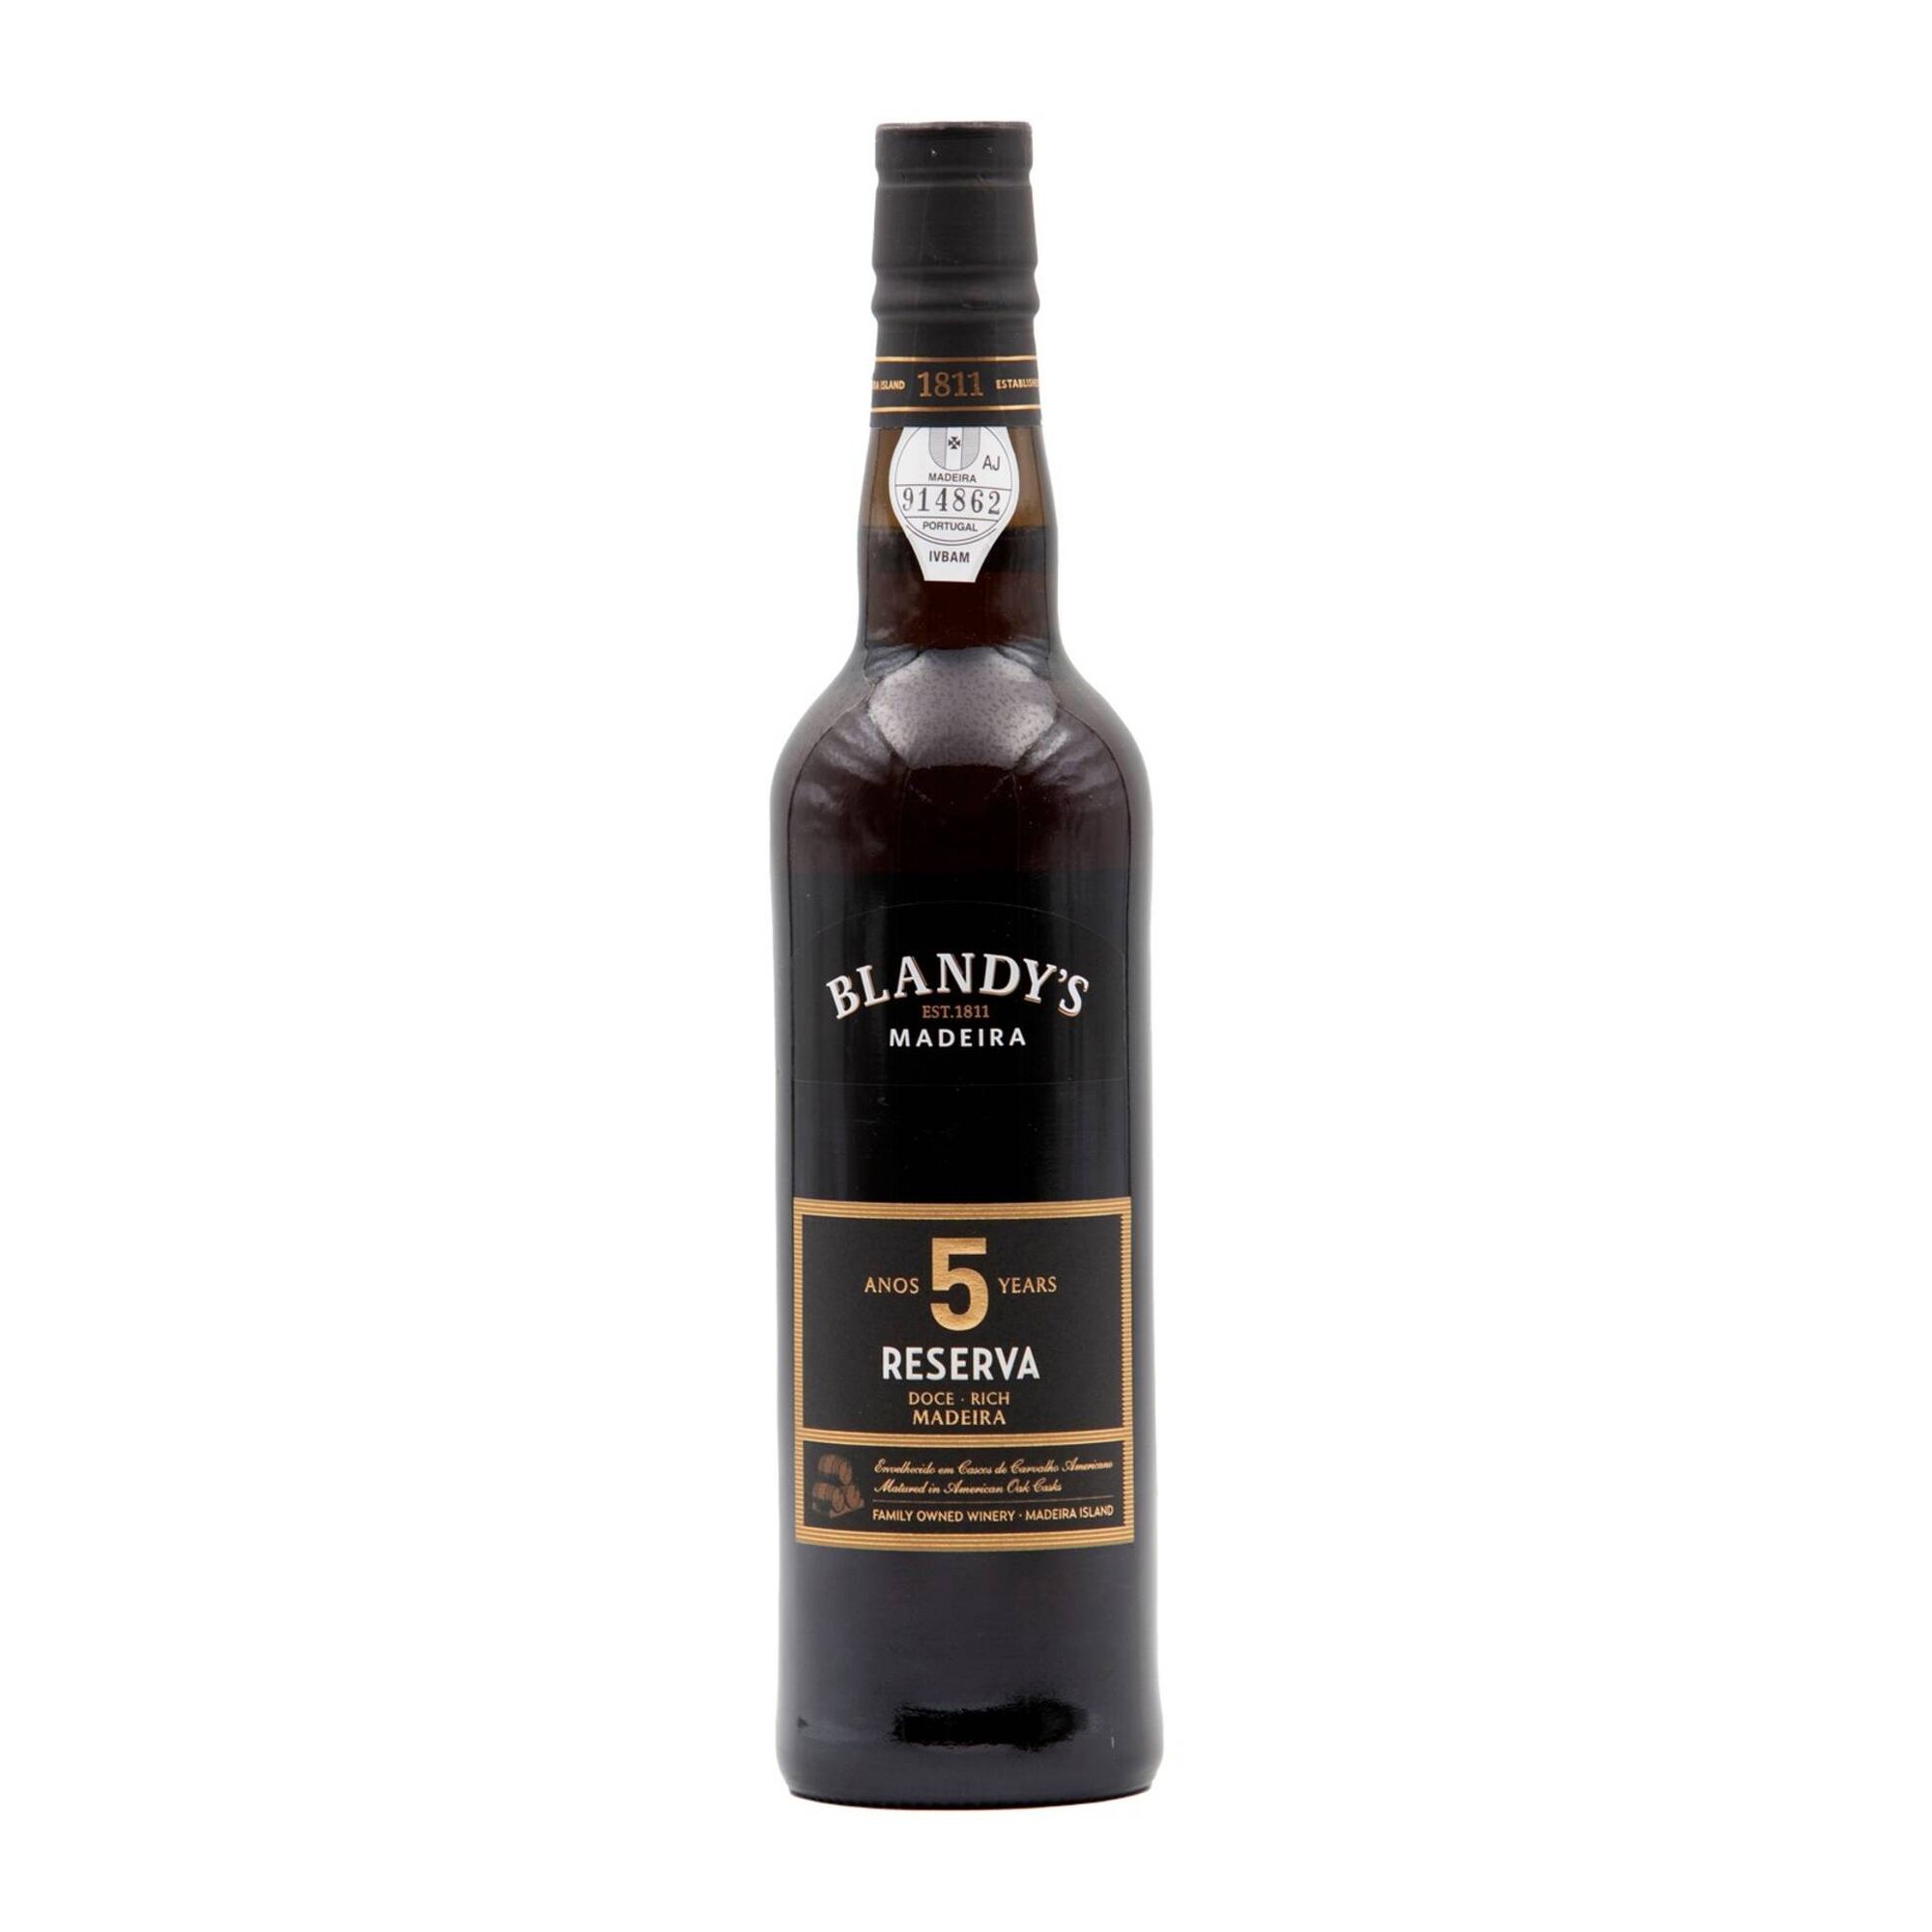 Blandy's 5 Anos Reserva Vinho da Madeira Full Rich